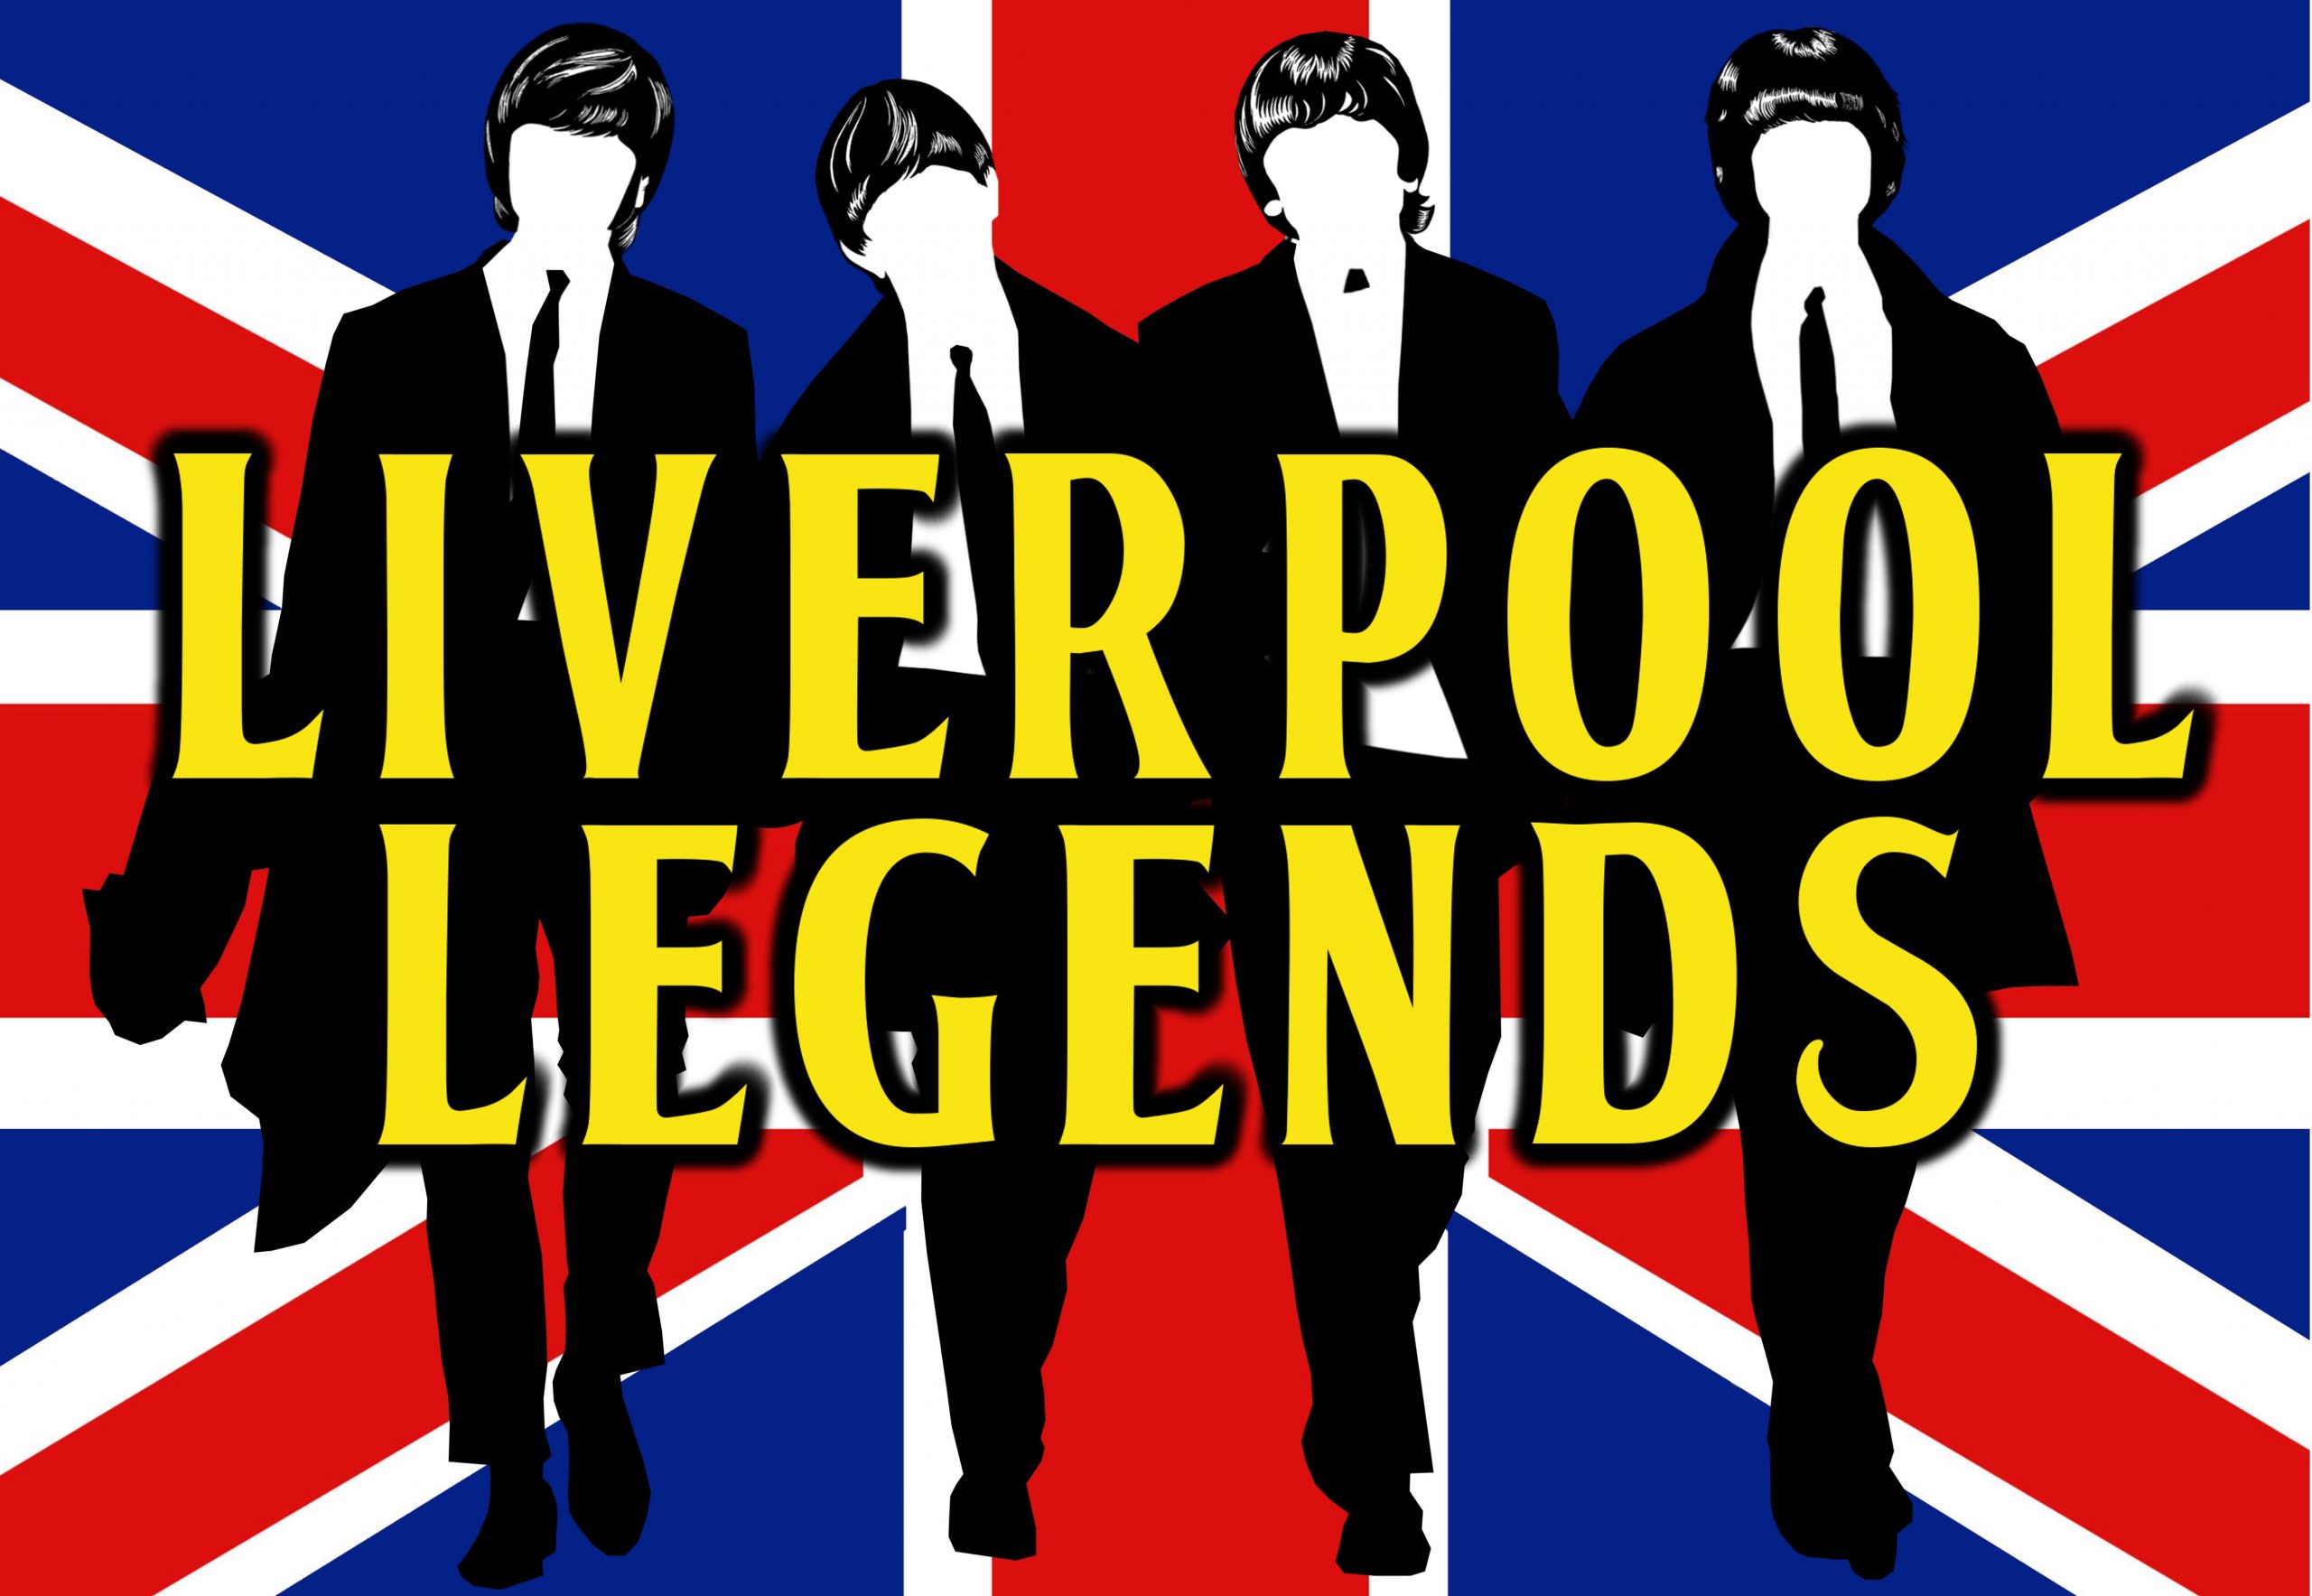 Liverpool Legends*